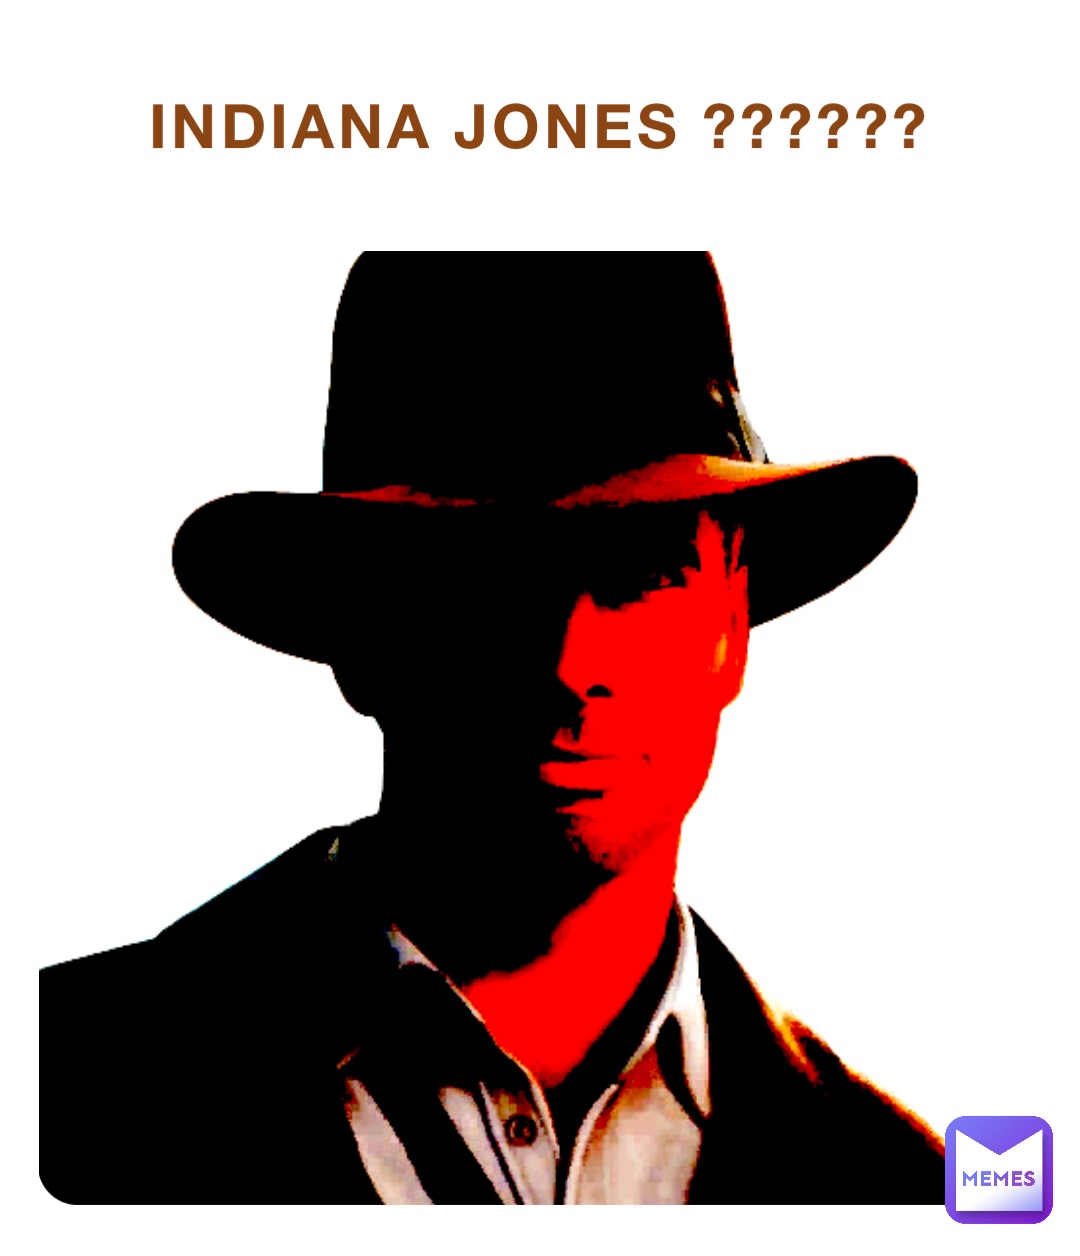 Indiana Jones ??????